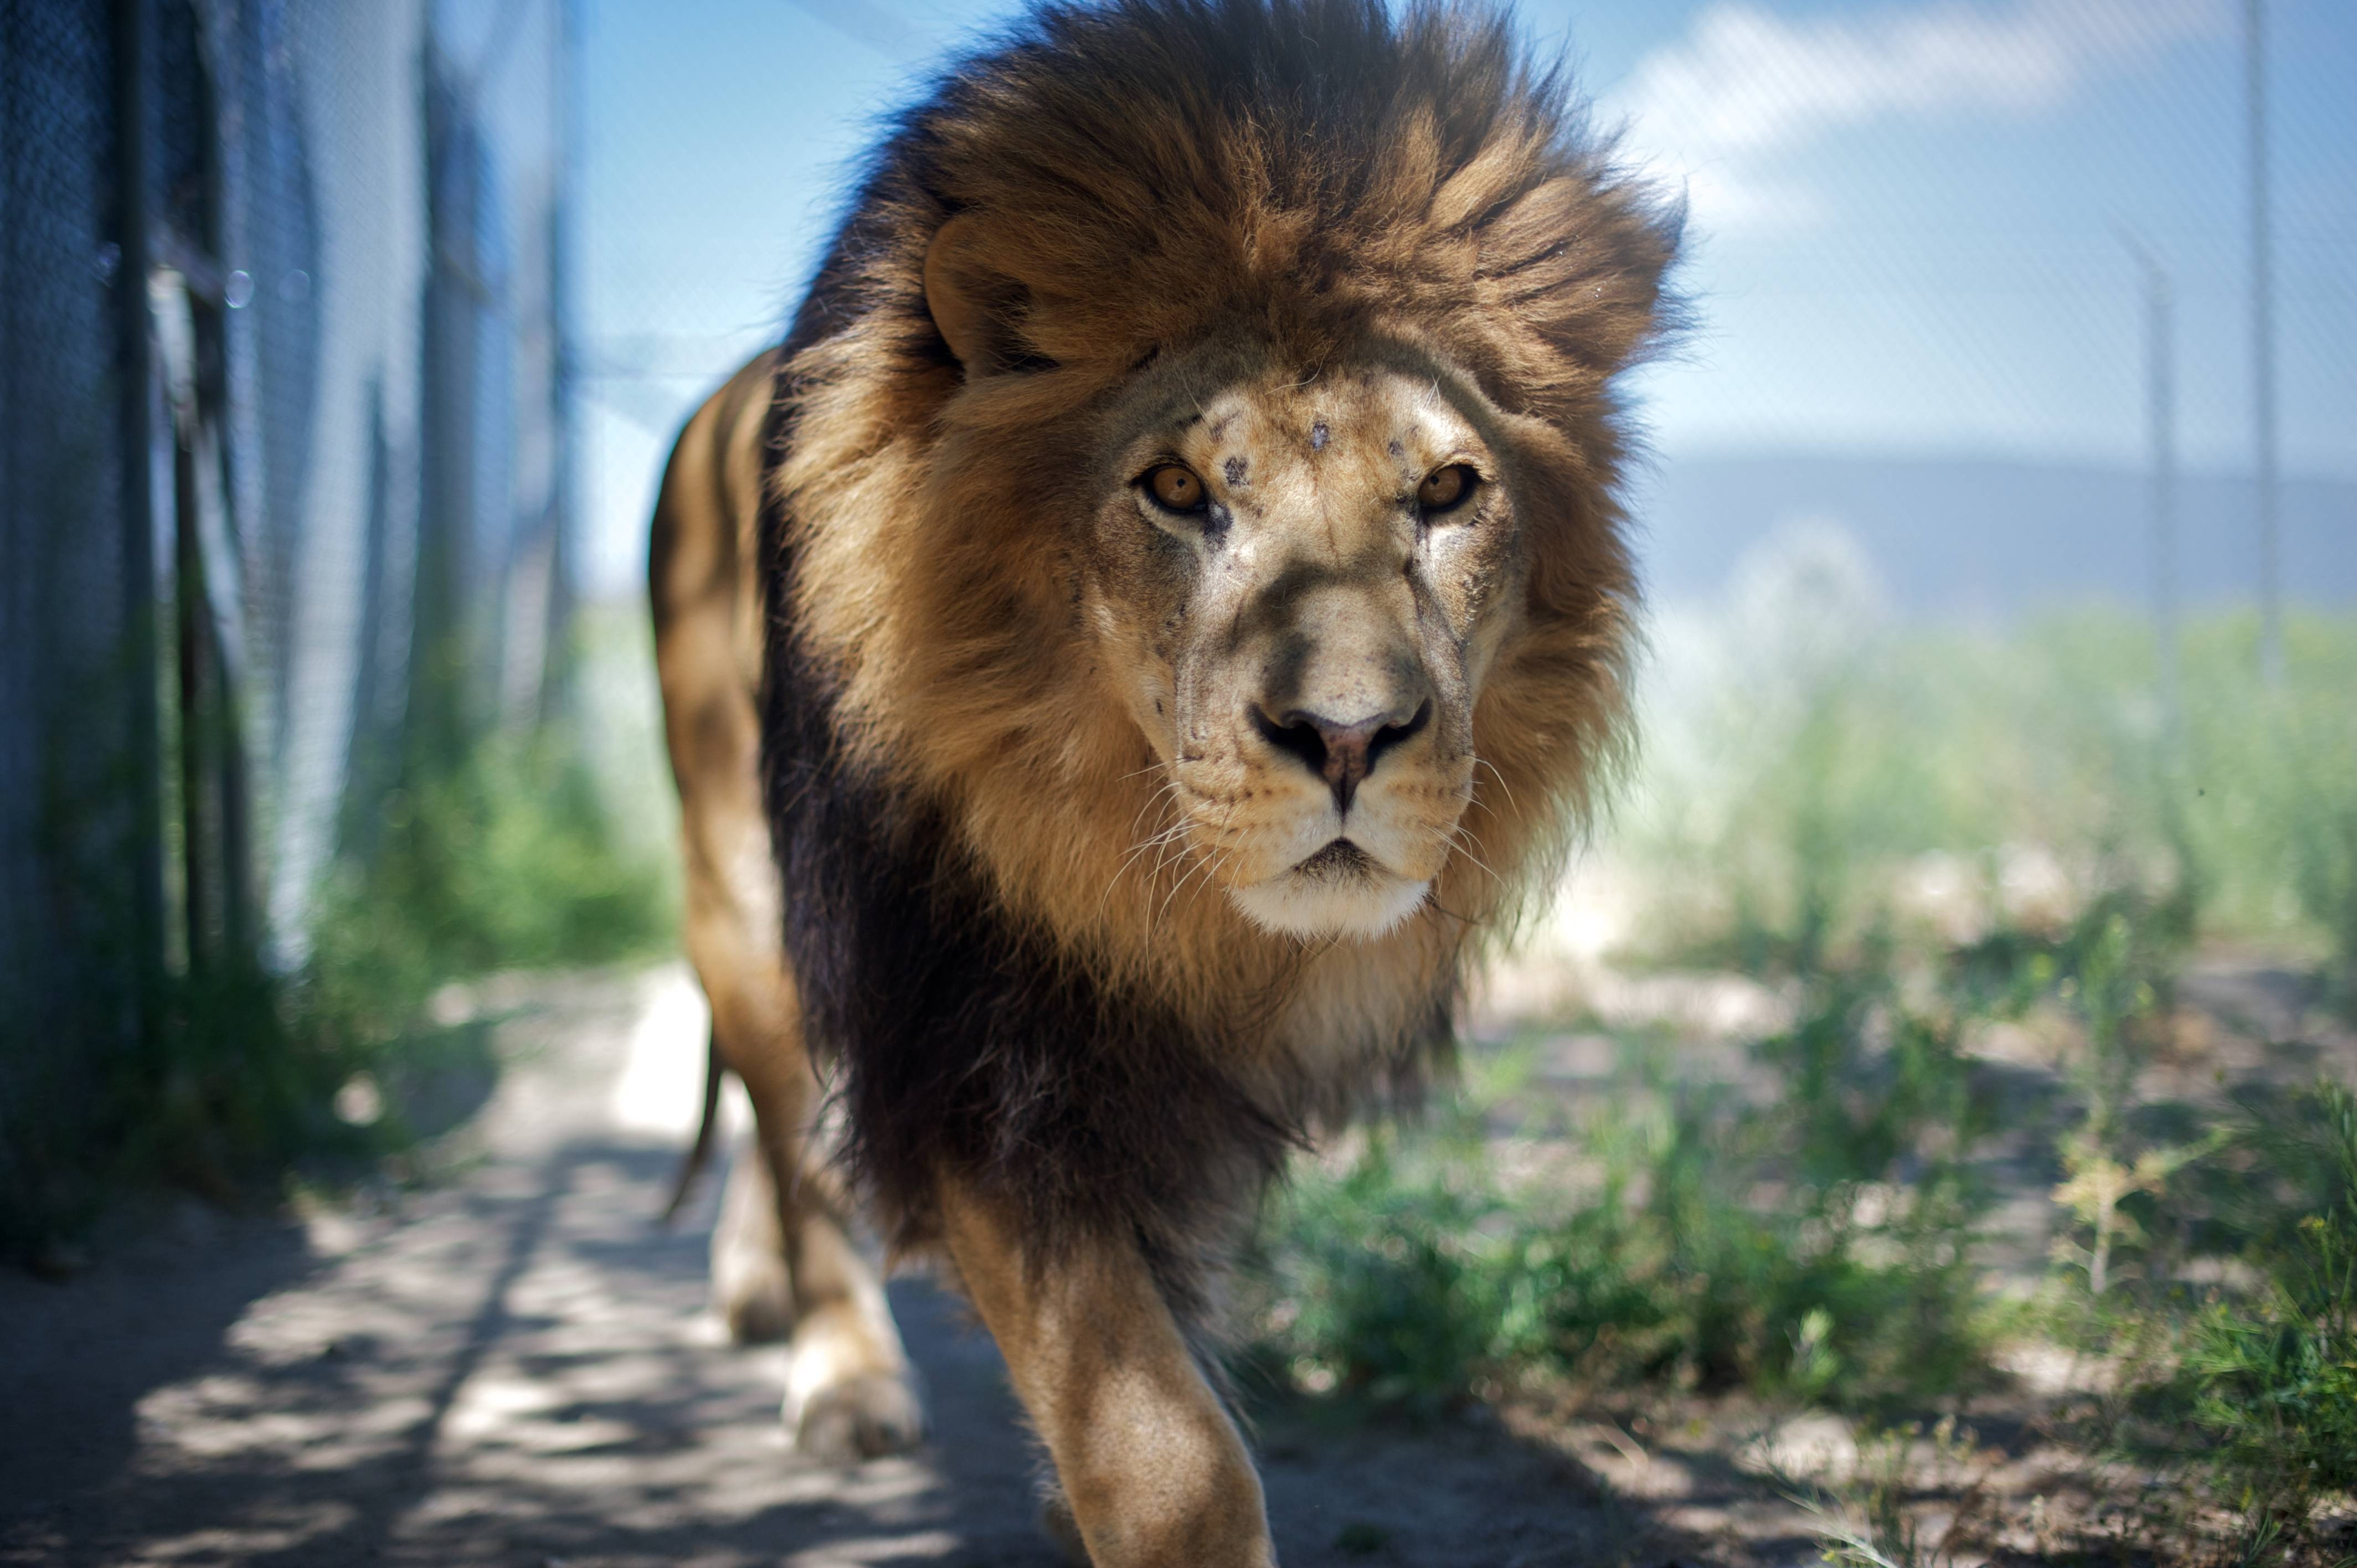 108187 descargar imagen un leon, animales, bozal, sombra, león, depredador, melena: fondos de pantalla y protectores de pantalla gratis